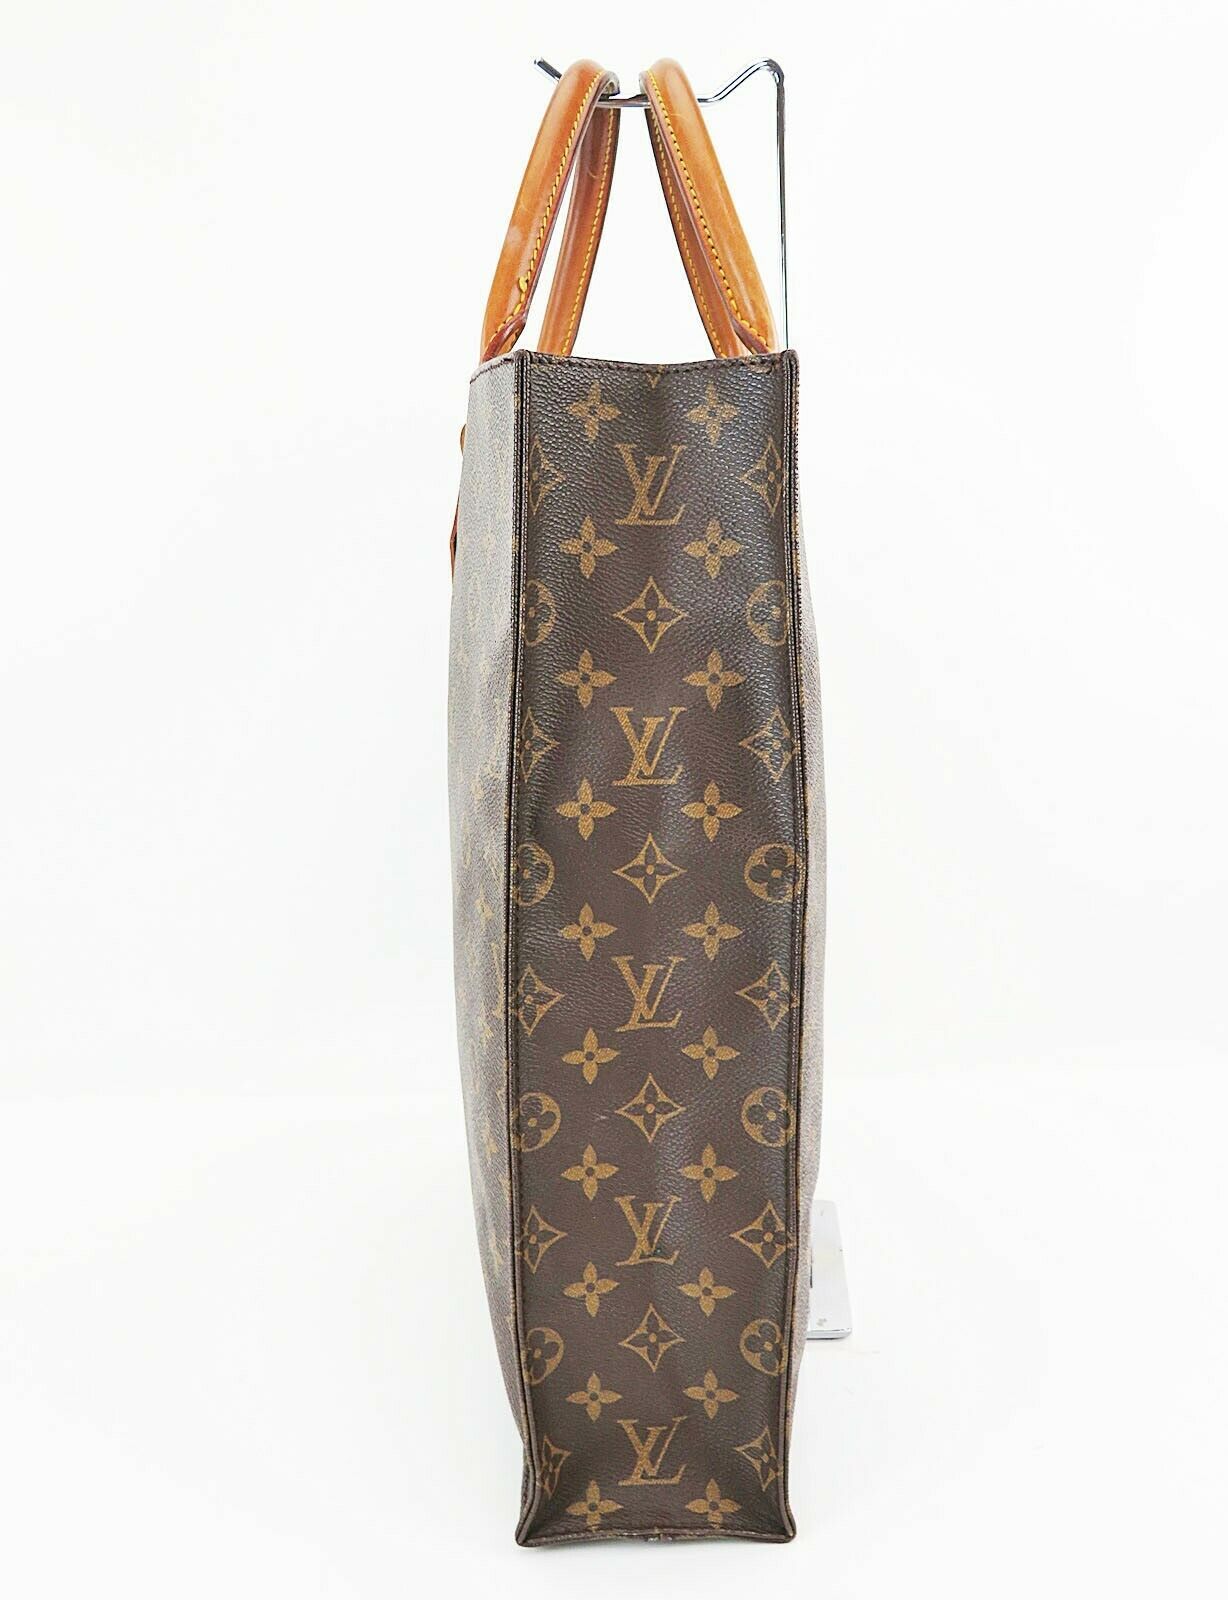 Authentic Louis Vuitton Sac Plat Monogram Tote Shopping Bag Purse #36525 - Women&#39;s Bags & Handbags